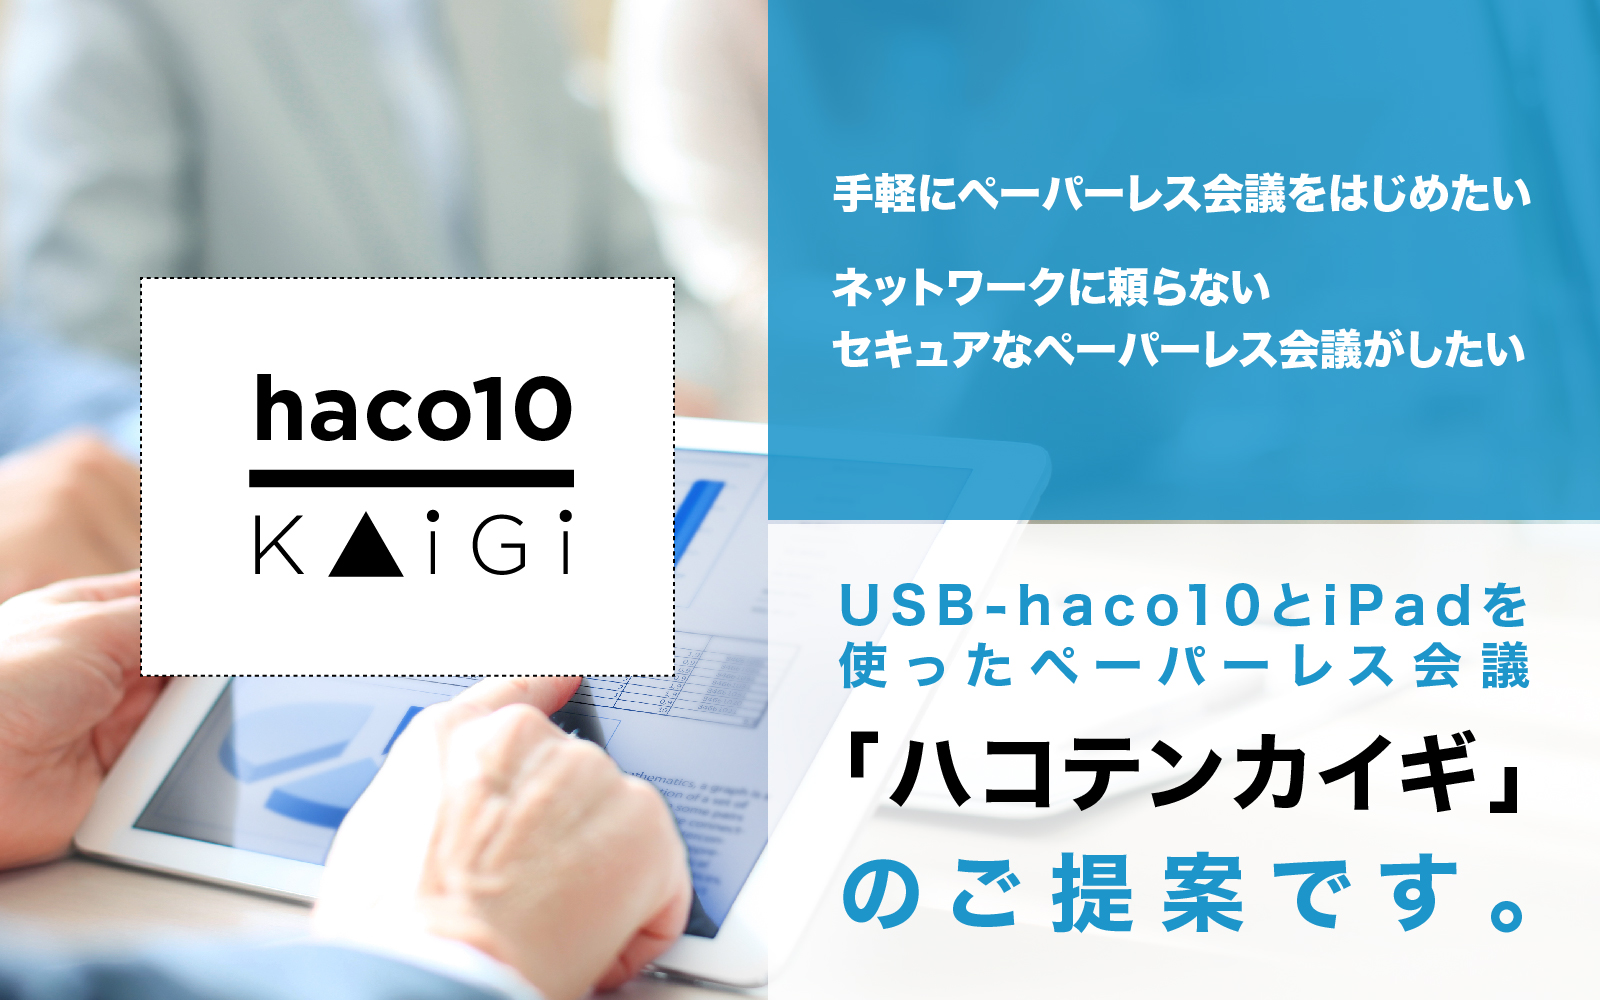 haco10 kaigi ハコテンカイギ | iPadを使ったペーパーレス会議をローコストに実現 | Tablet*Cart Series |  エム・ティ・プランニング株式会社